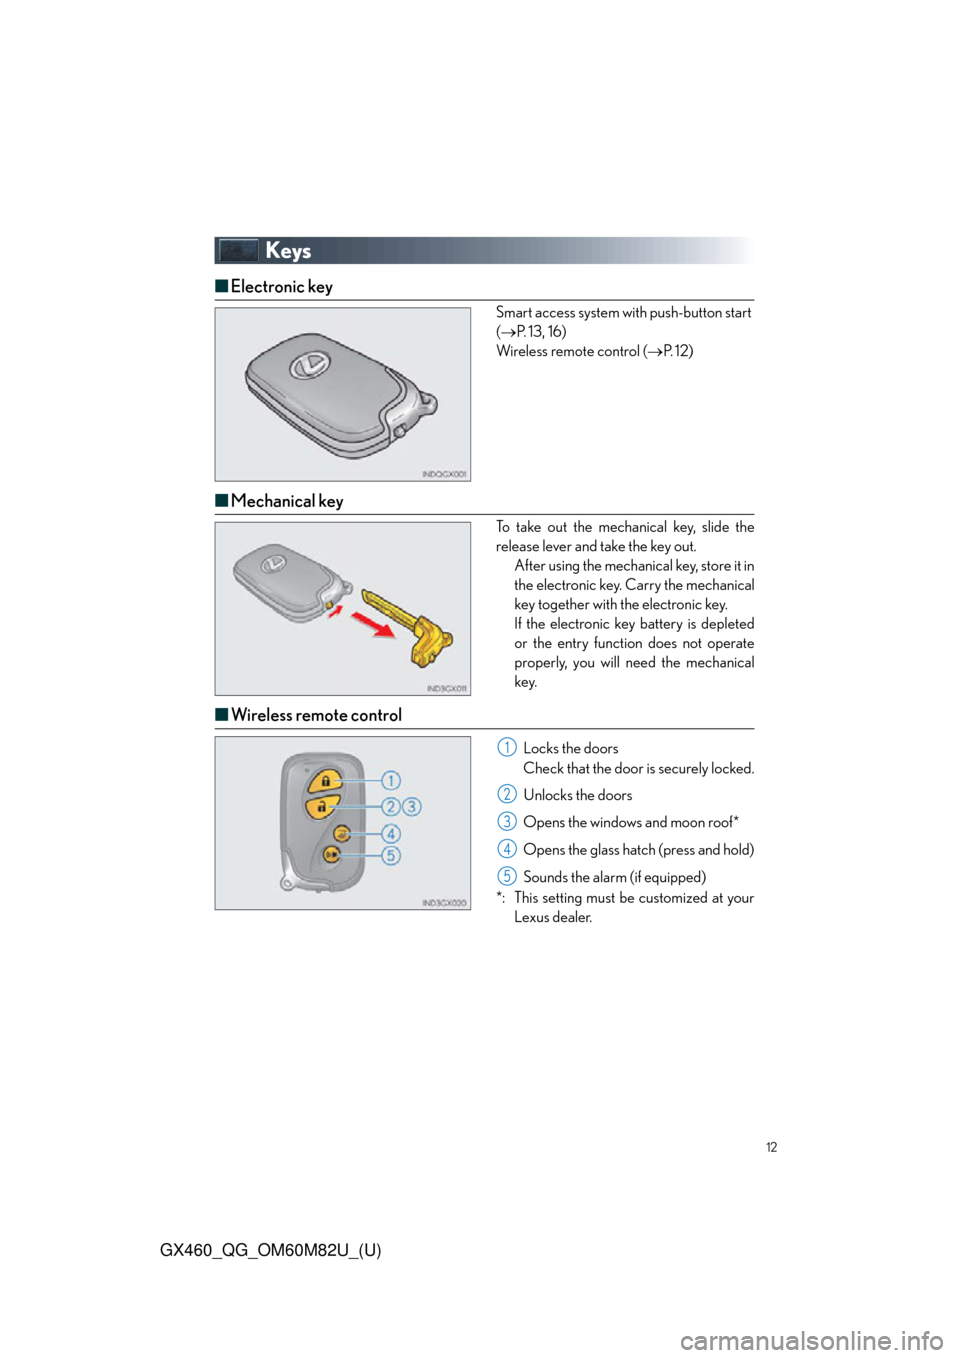 Lexus GX460 2016  Multimedia Manual / 12
GX460_QG_OM60M82U_(U)
Keys
■Electronic key
Smart access system with push-button start 
( P. 13, 16)
Wireless remote control ( P. 1 2 )
■Mechanical key
To take out the mechan ical key, sli